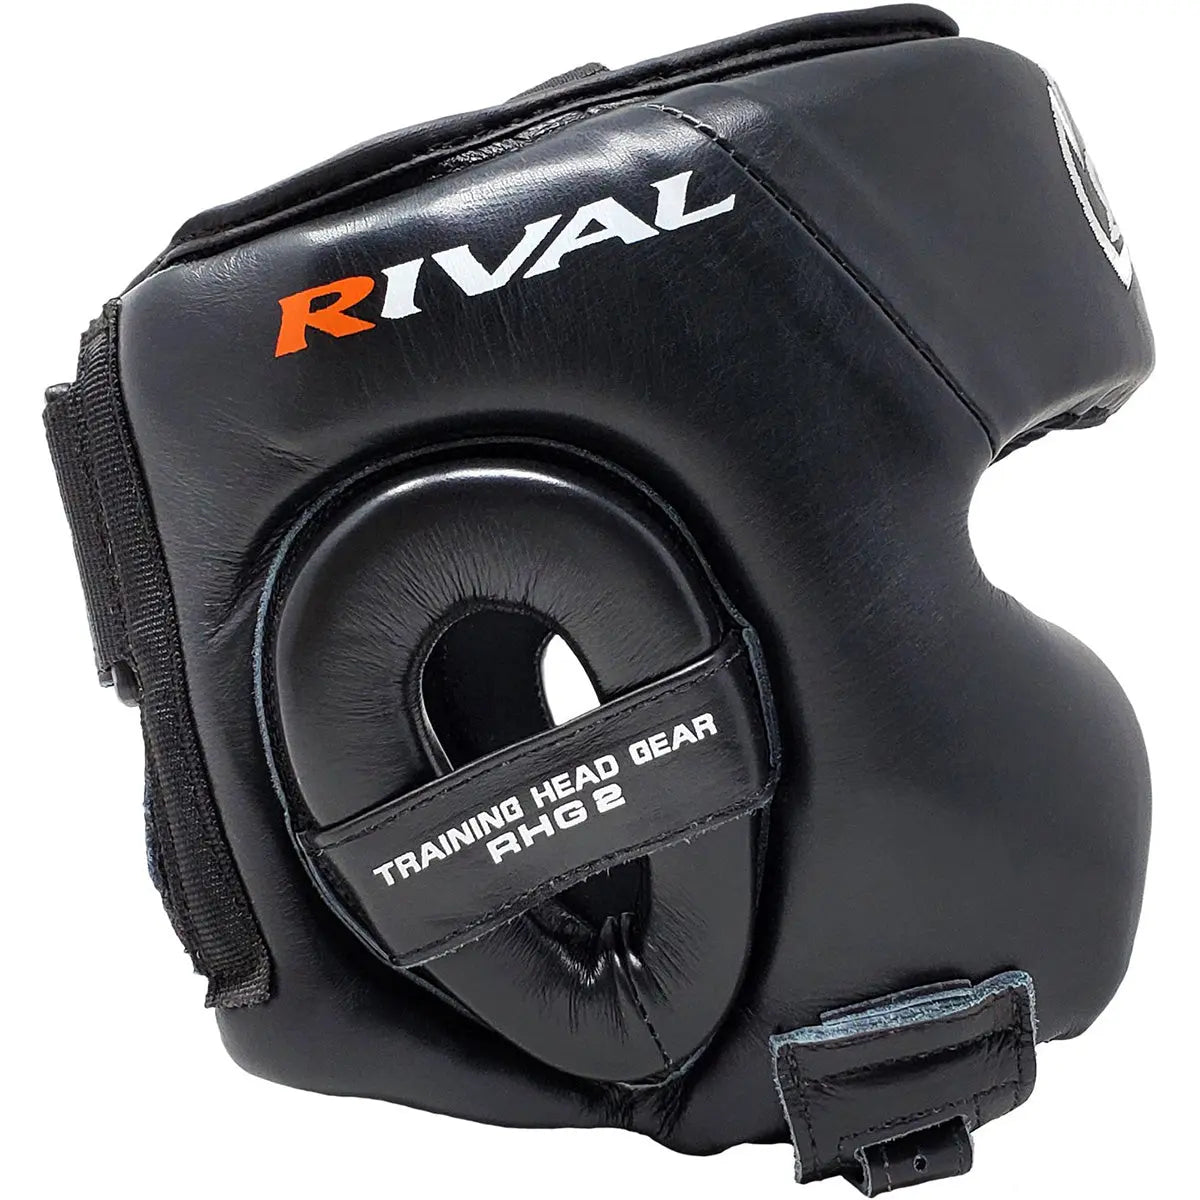 RIVAL Boxing RHG2 Hybrid Headgear RIVAL